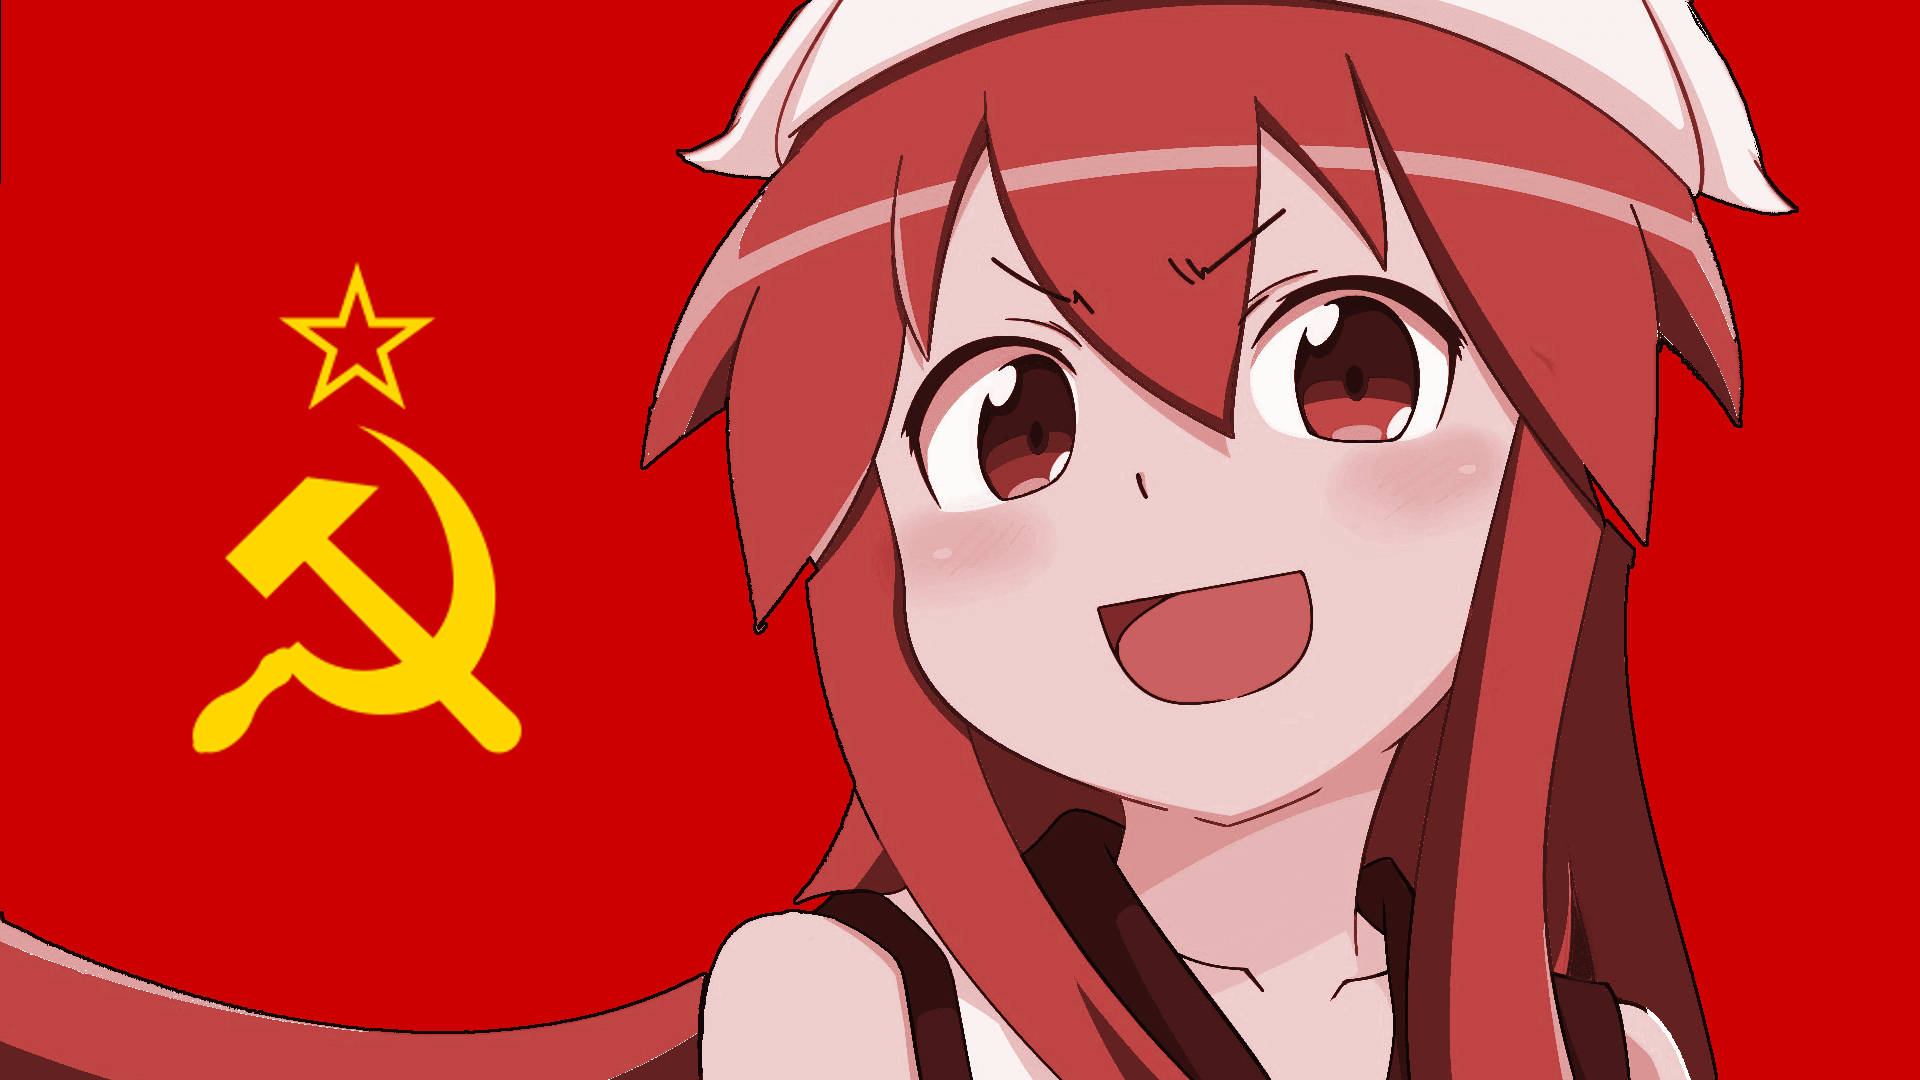 Free Soviet Union Flag Wallpaper Downloads, [100+] Soviet Union Flag  Wallpapers for FREE 